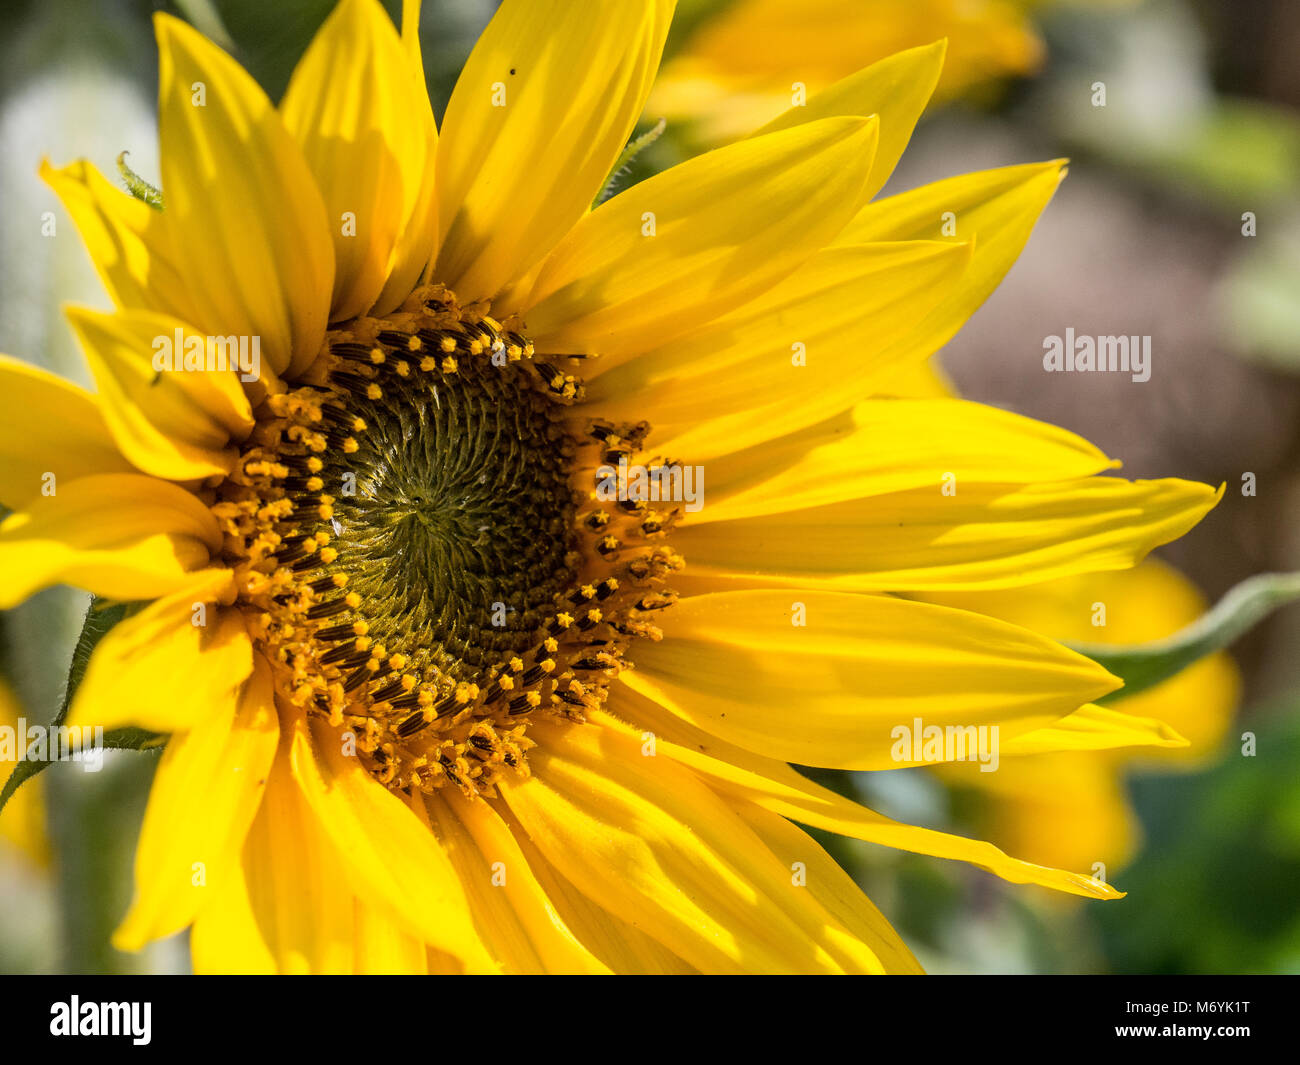 Three quarter image of a bright yellow sunflower Stock Photo